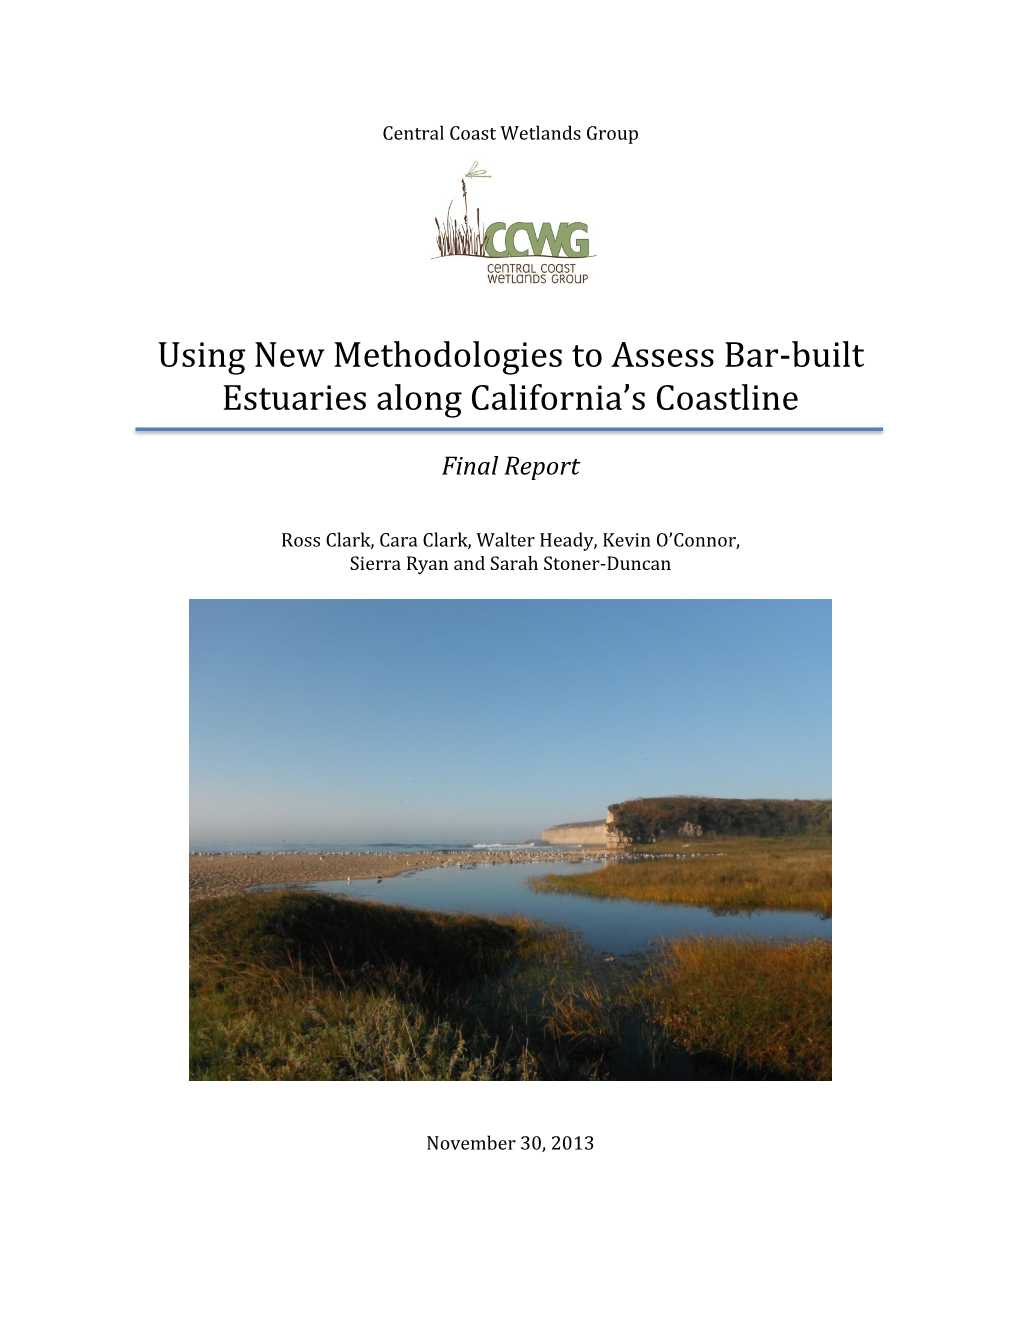 Using New Methodologies to Assess Bar-Built Estuaries Along The